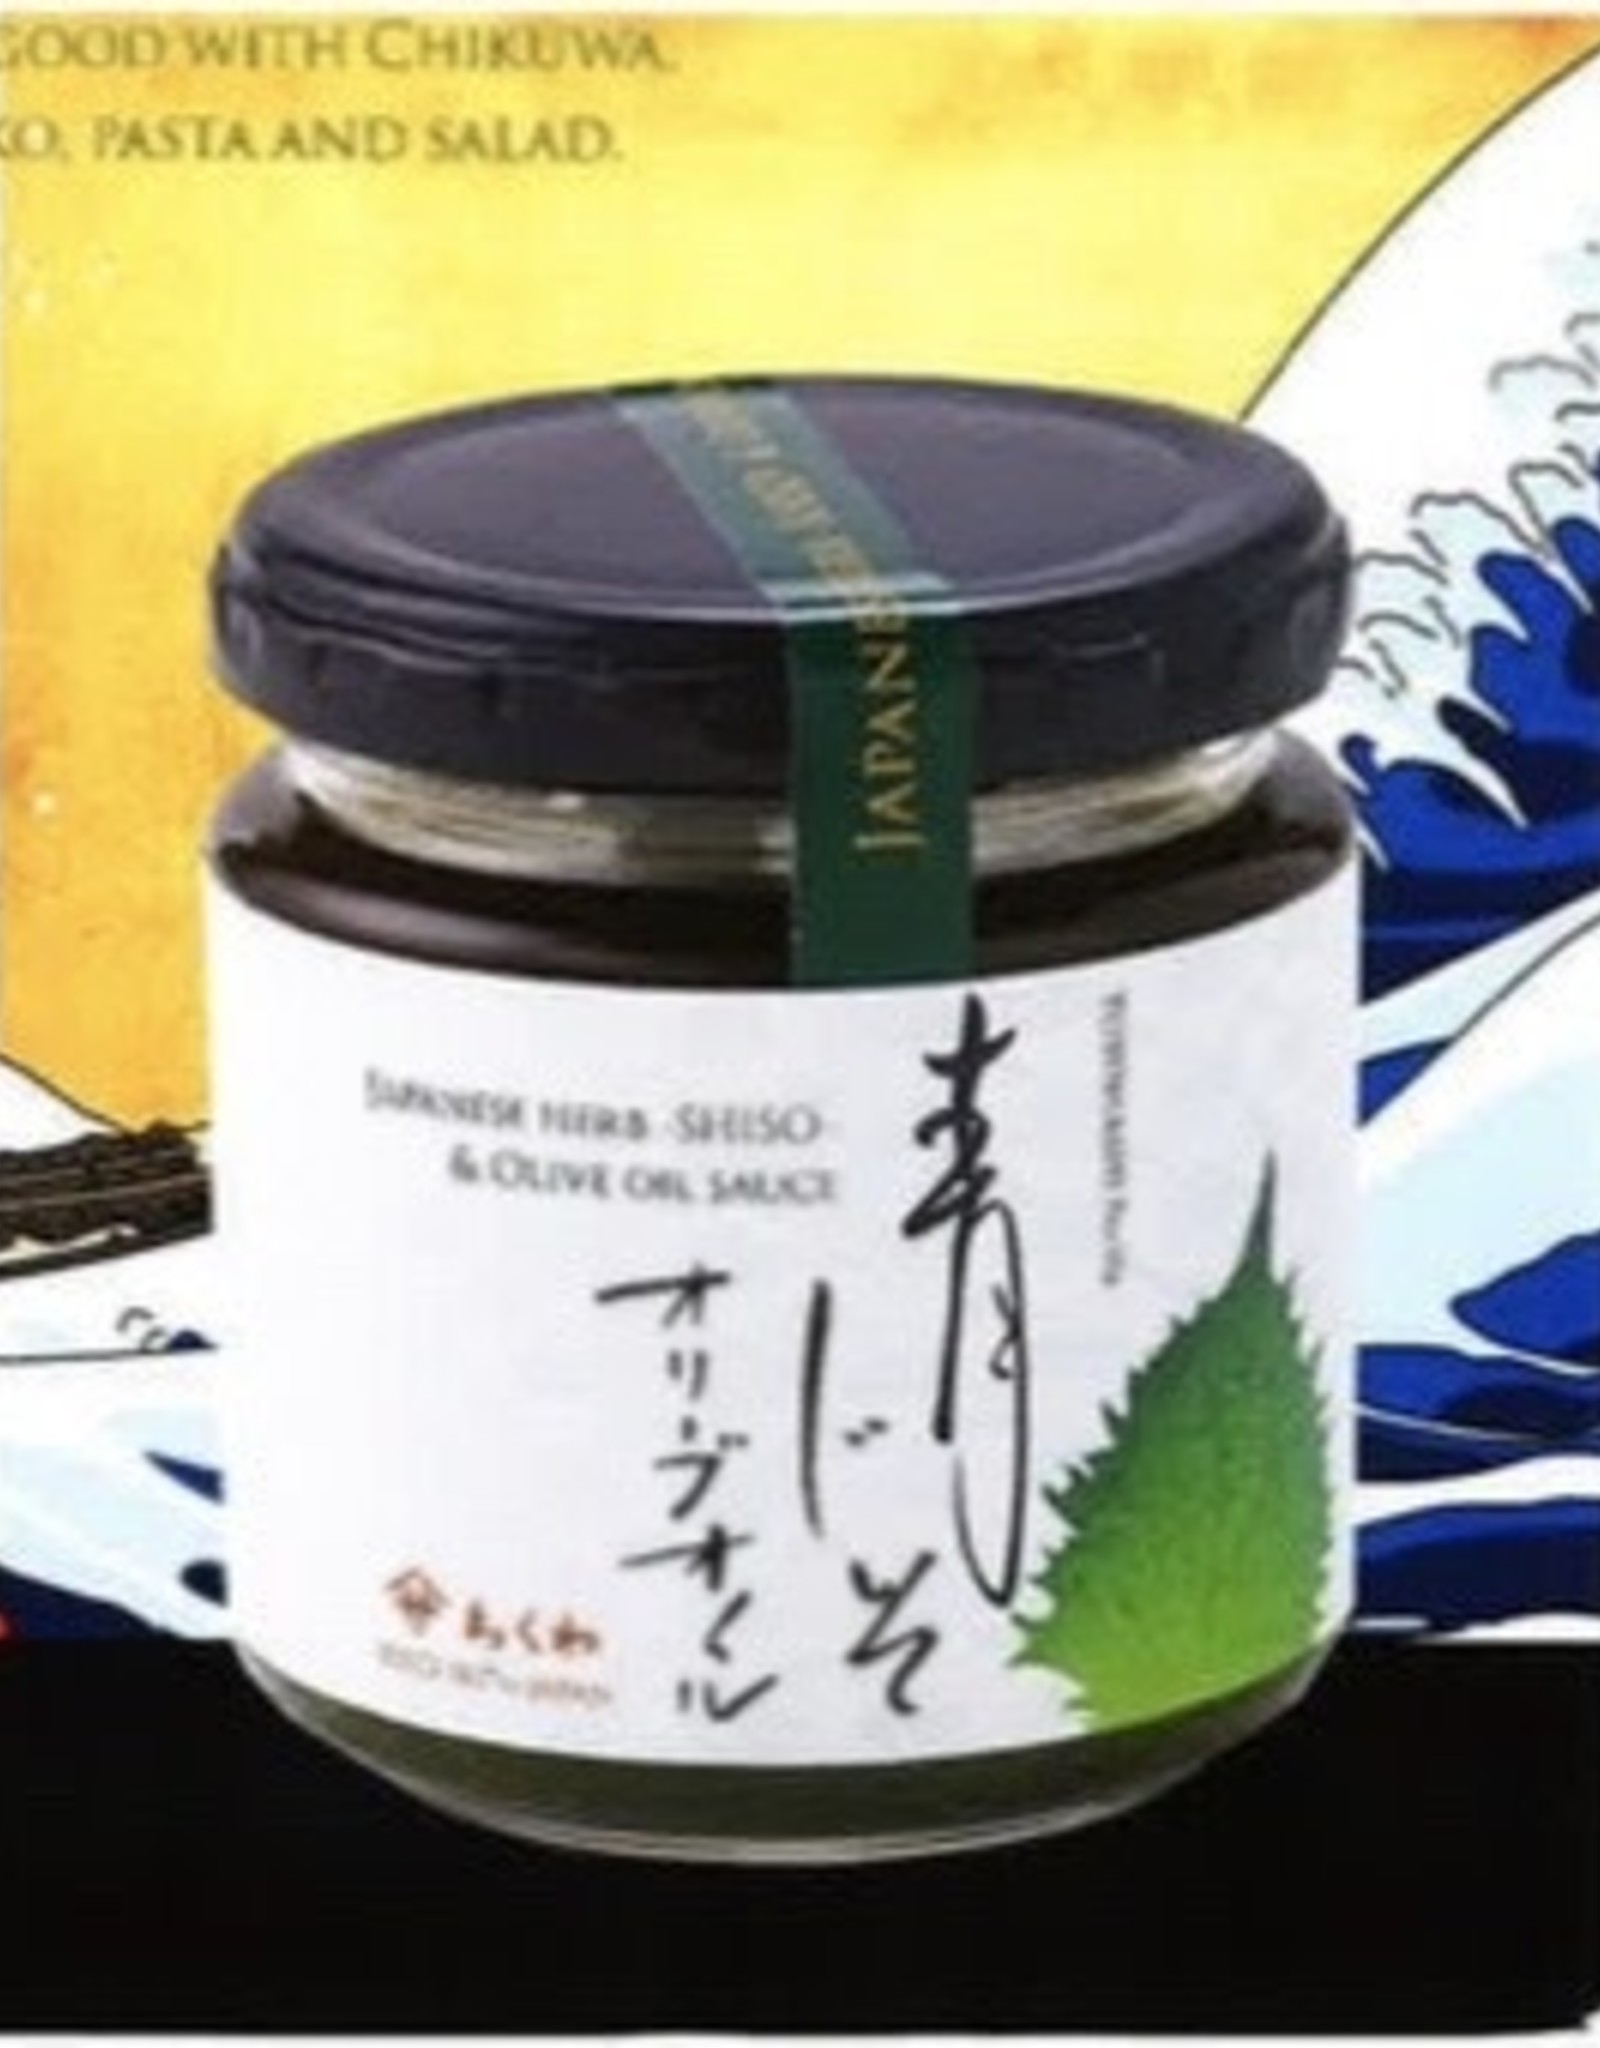 Yamasa (HL)  Green Perilla Sauce - Yamasa Aojiso Olive Oil - Japanese Herb-Shiso & Olive Oil Sauce * 日本 -青紫蘇油醬